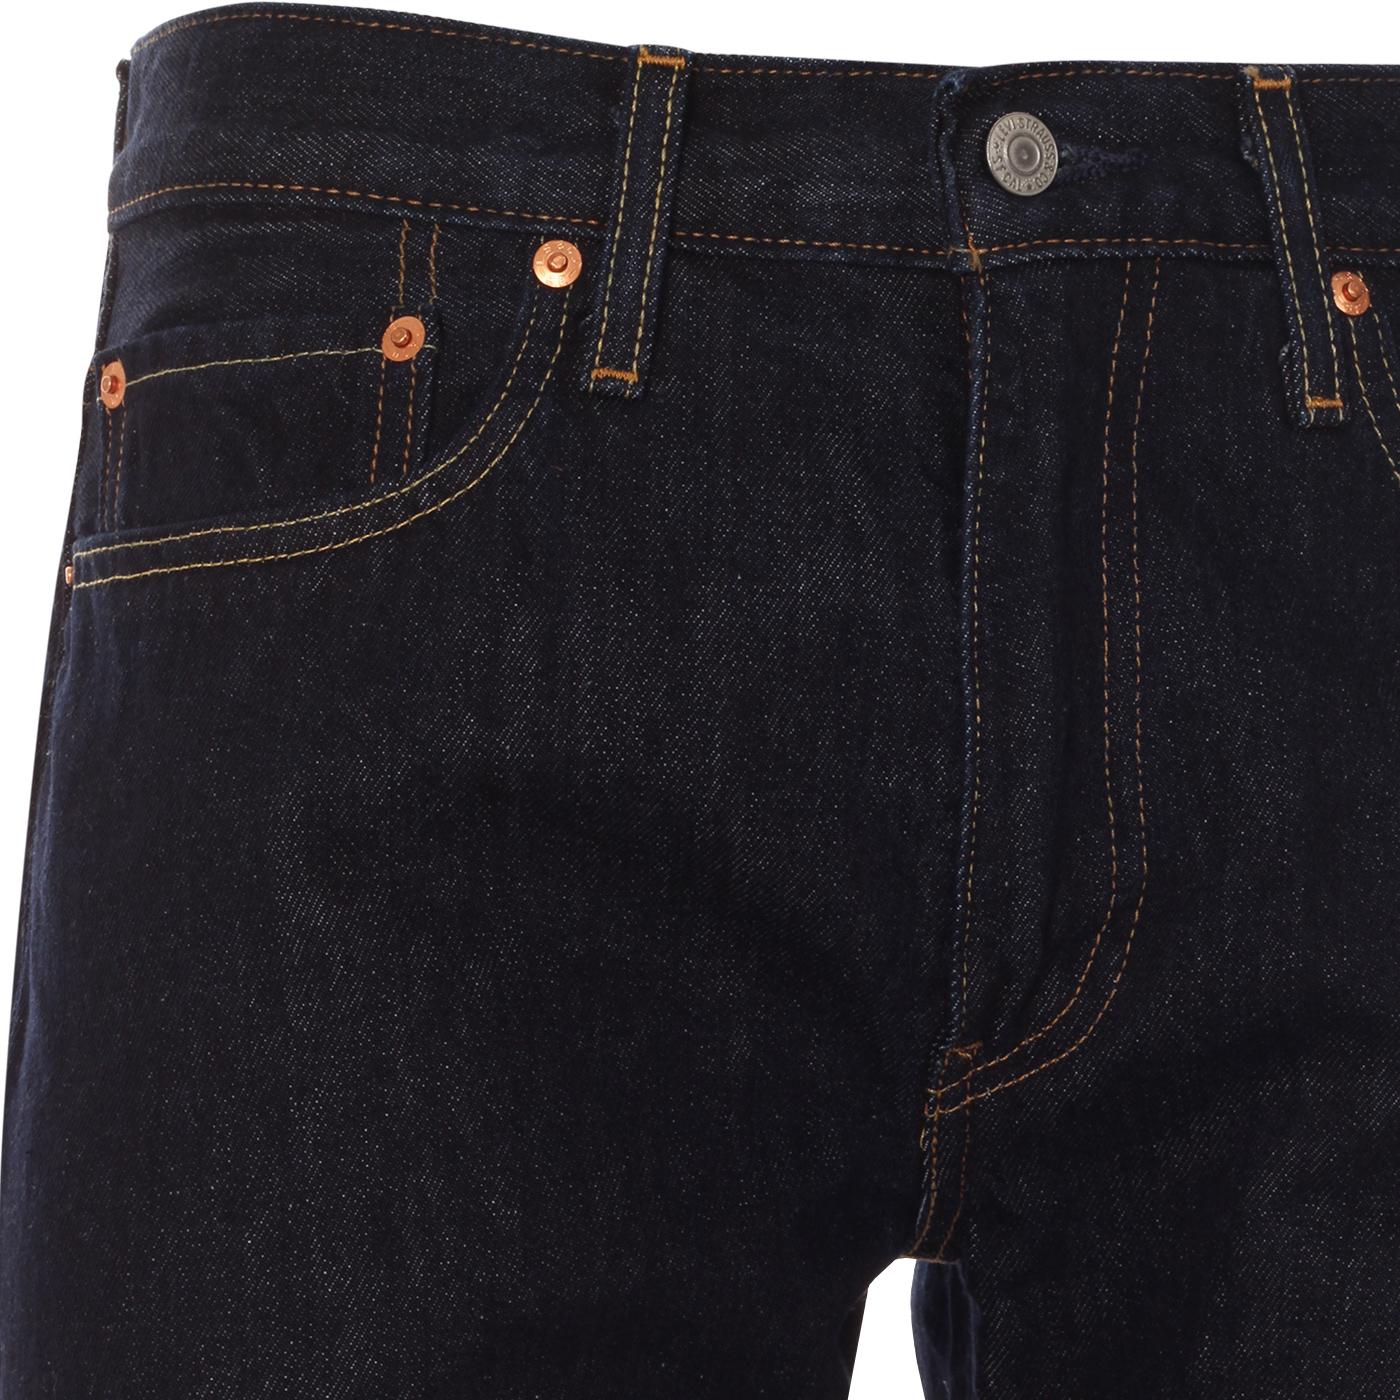 LEVI'S 502 Men's Retro Mod Taper Jeans in Onewash